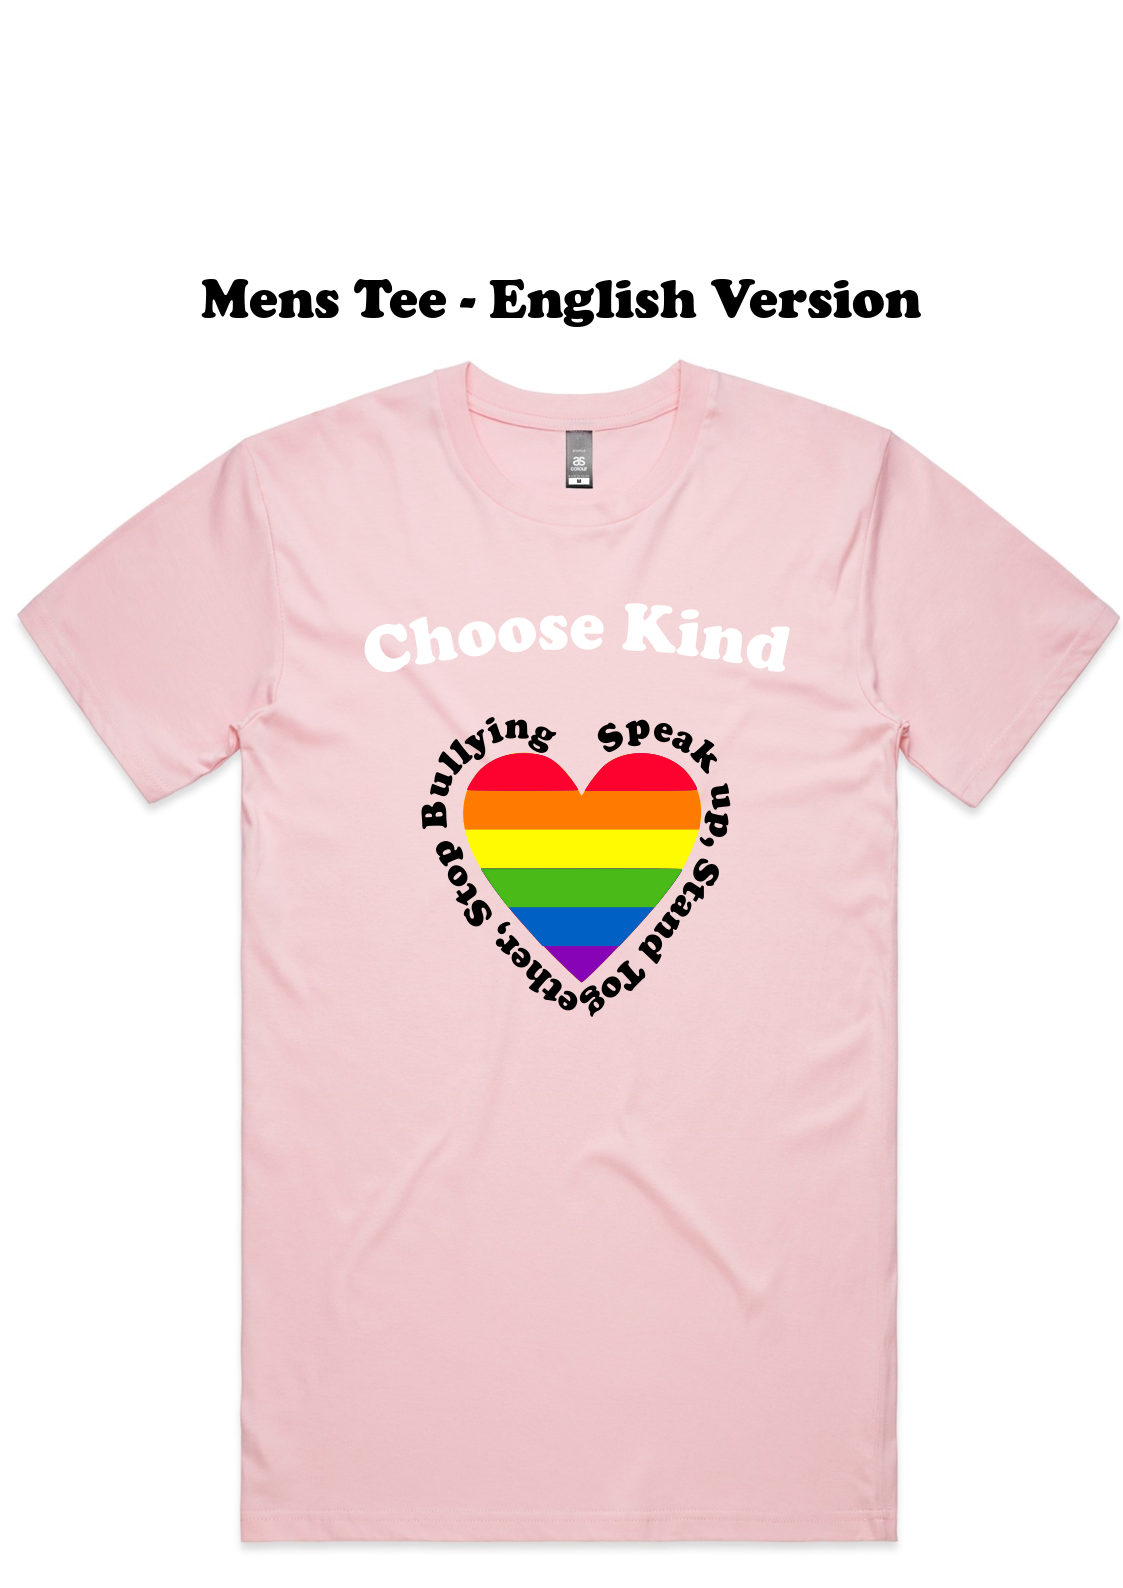 Choose Kind - Mens Tee - English